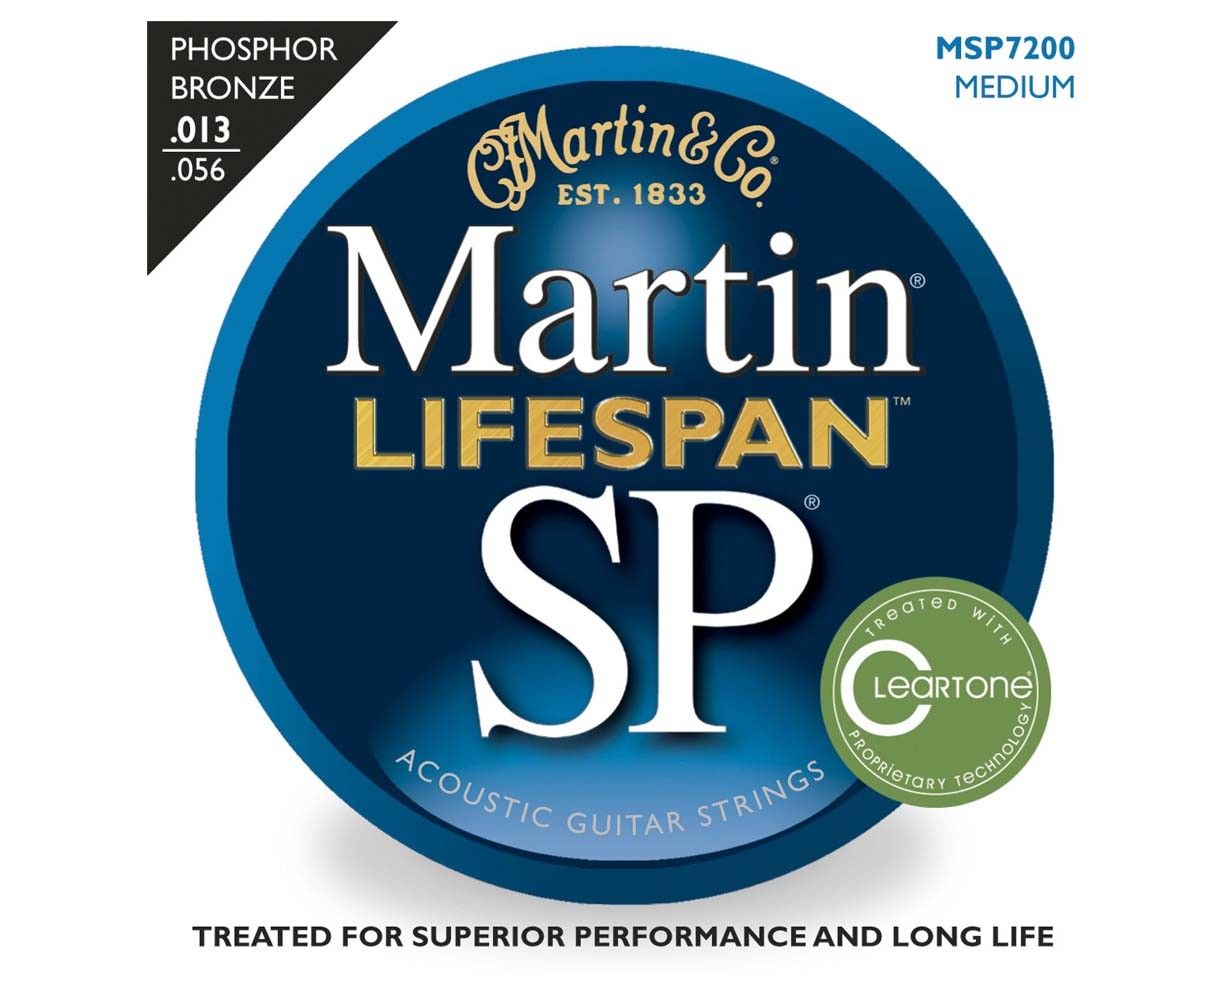 Martin & Co SP Lifespan MSP 7200